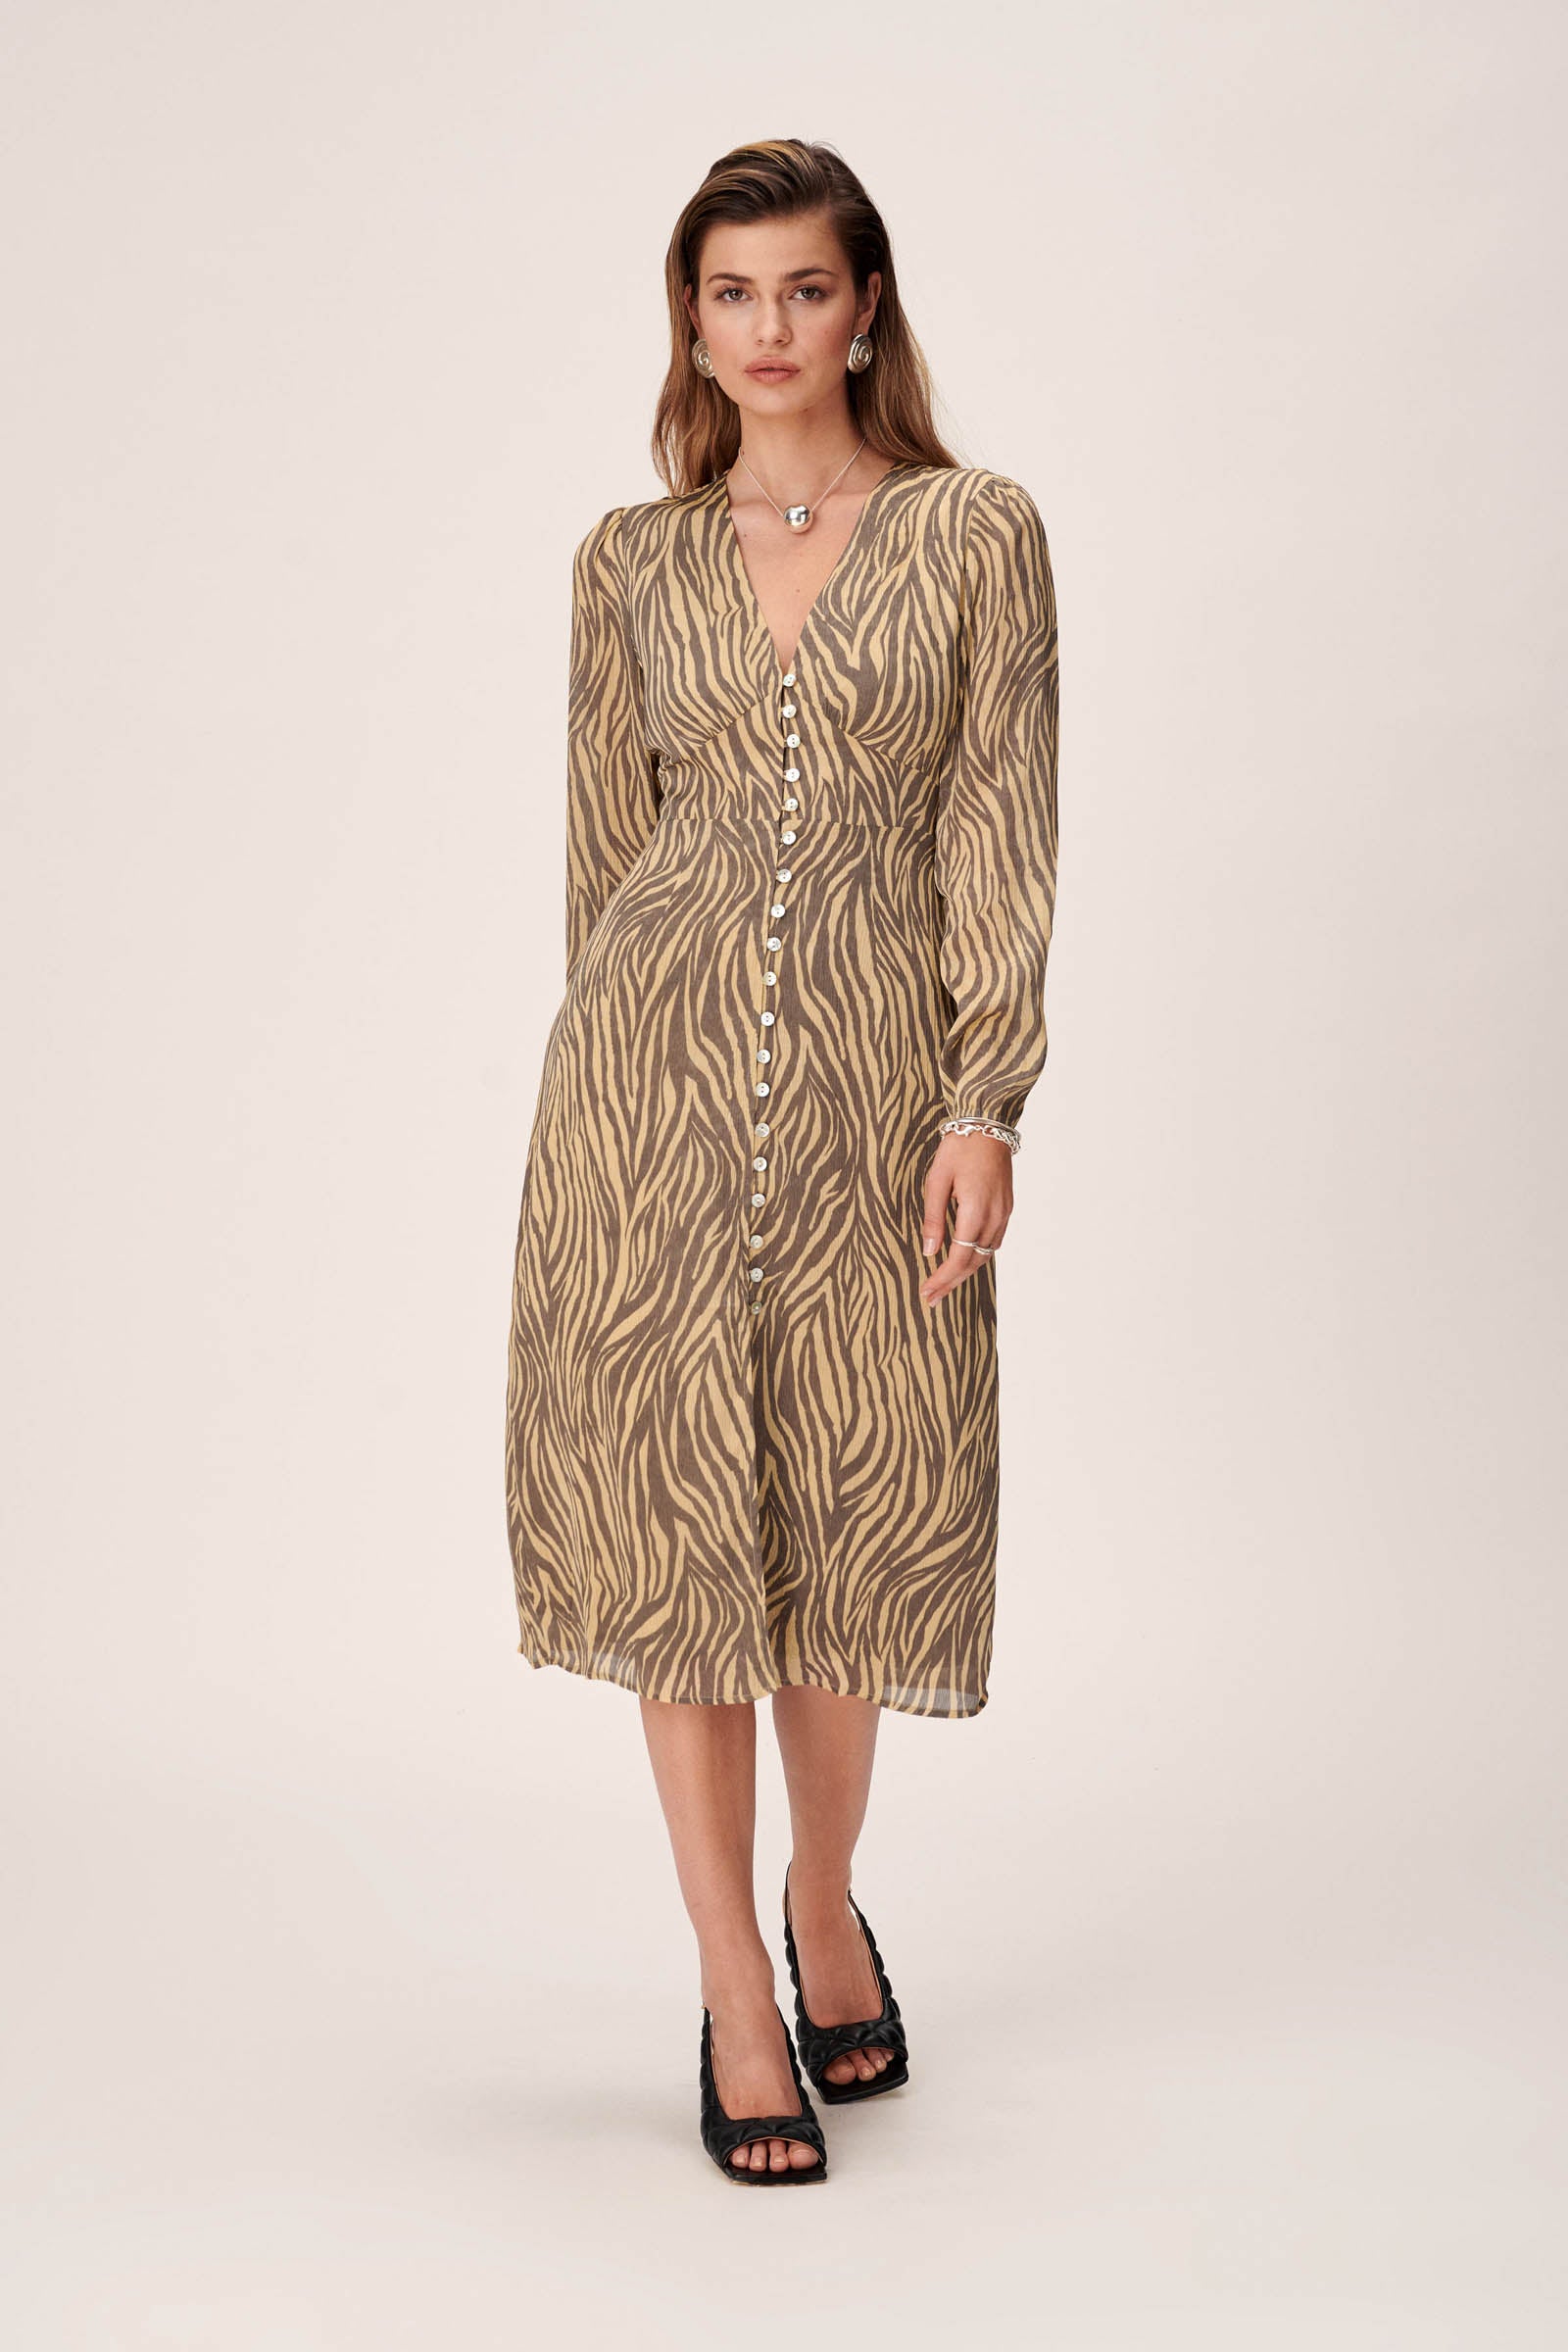 Paris dress in zebra print – Shop dress